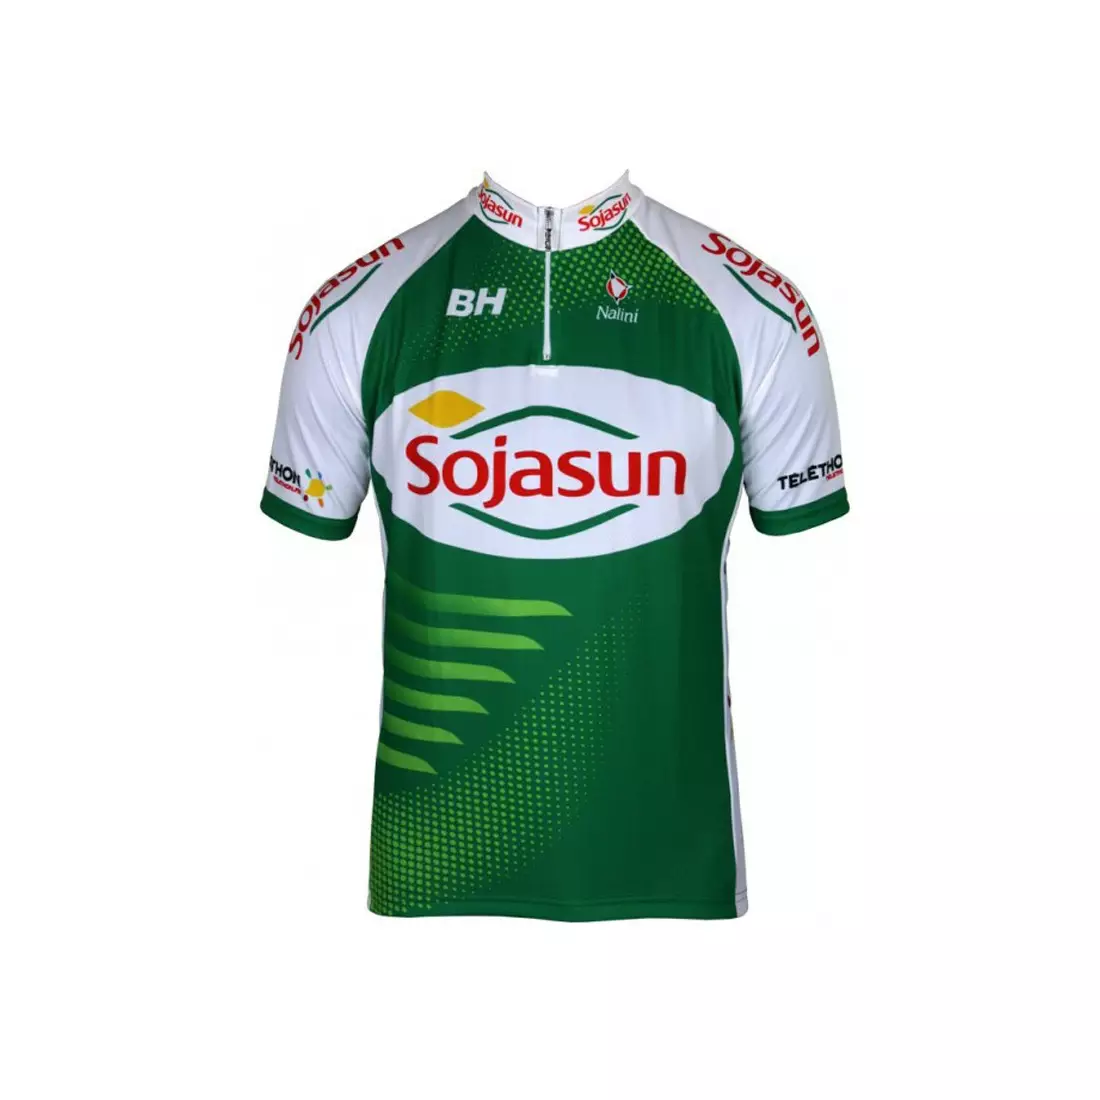 NALINI - TEAM SOJASUN 2013 - tricou de ciclism